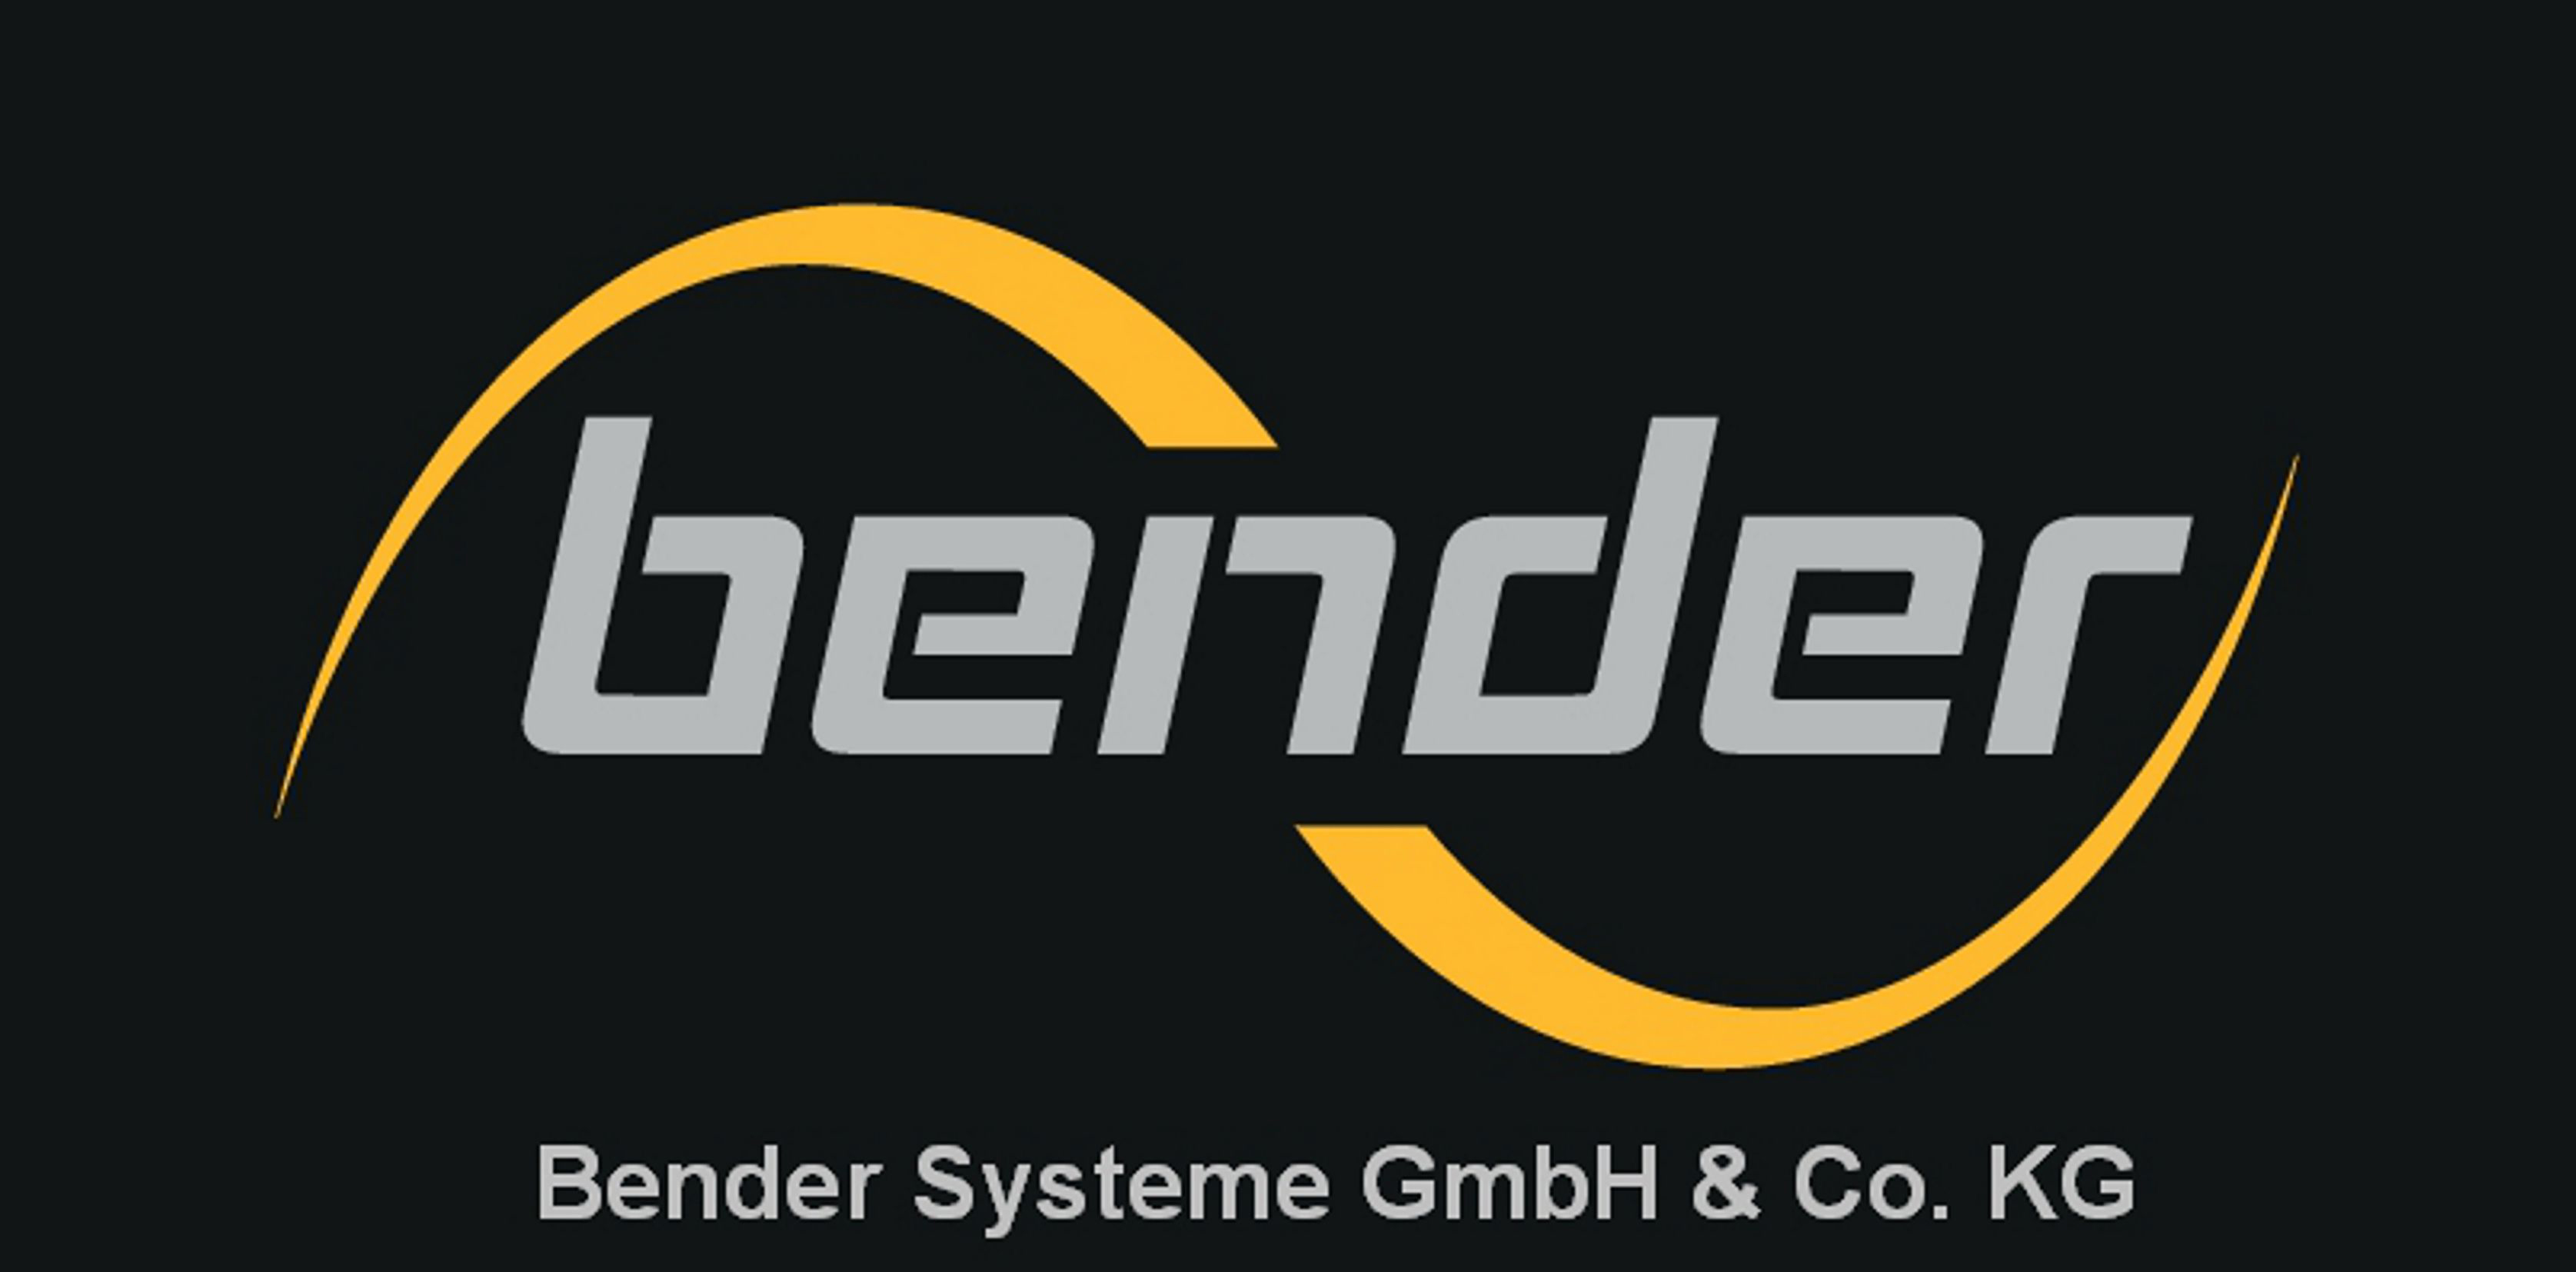 Bender Systeme